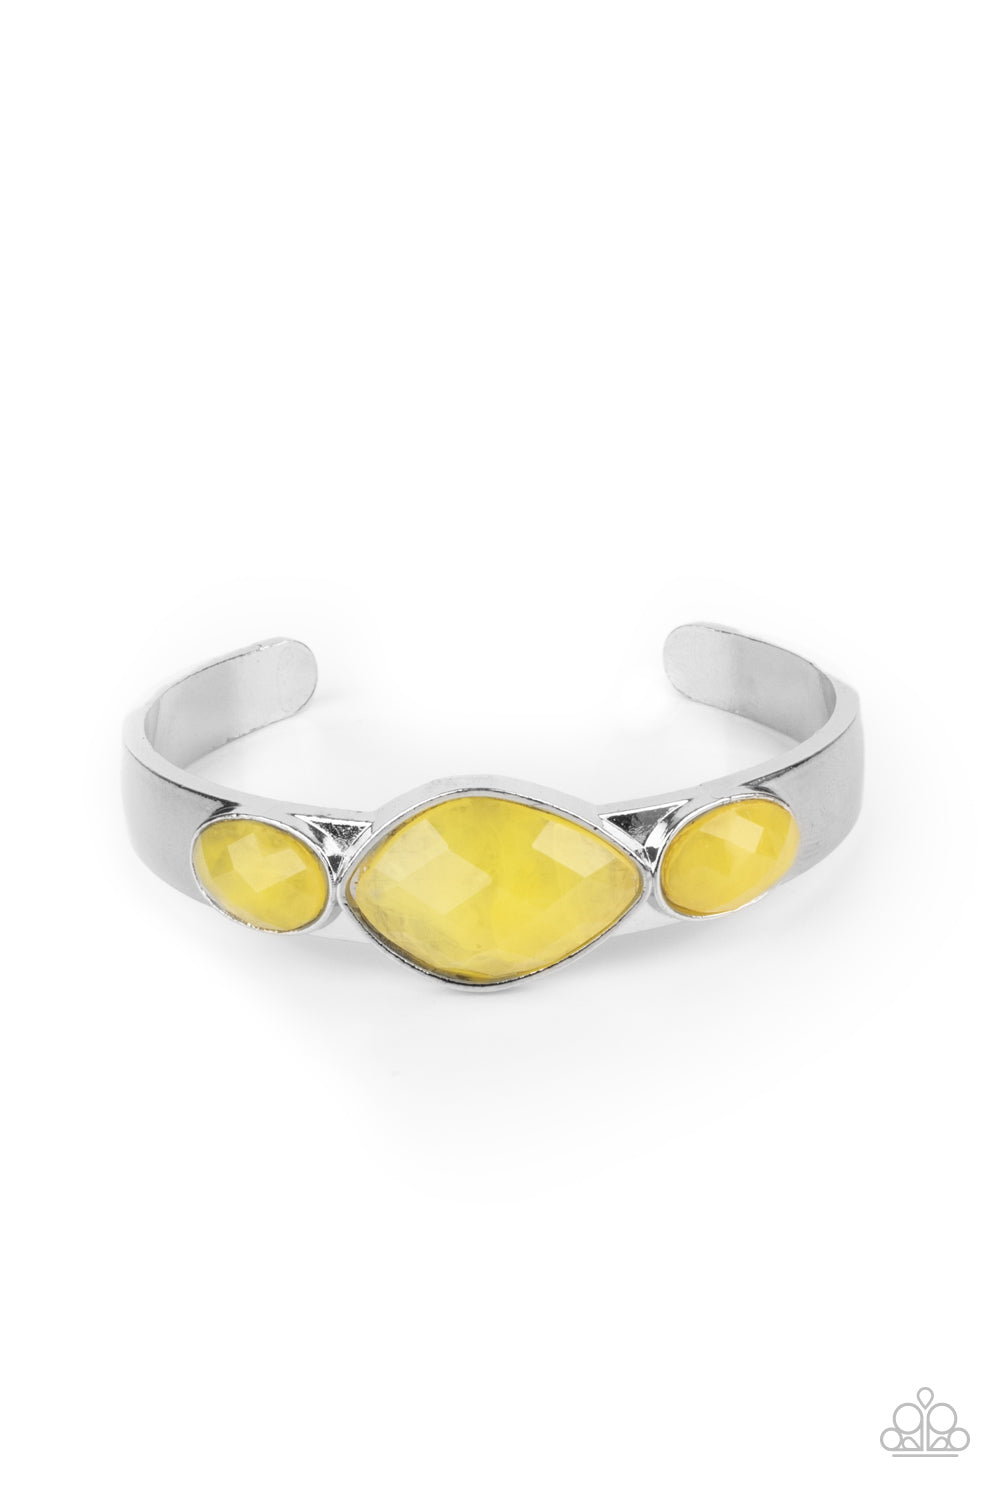 five-dollar-jewelry-next-stop-olympus-yellow-paparazzi-accessories